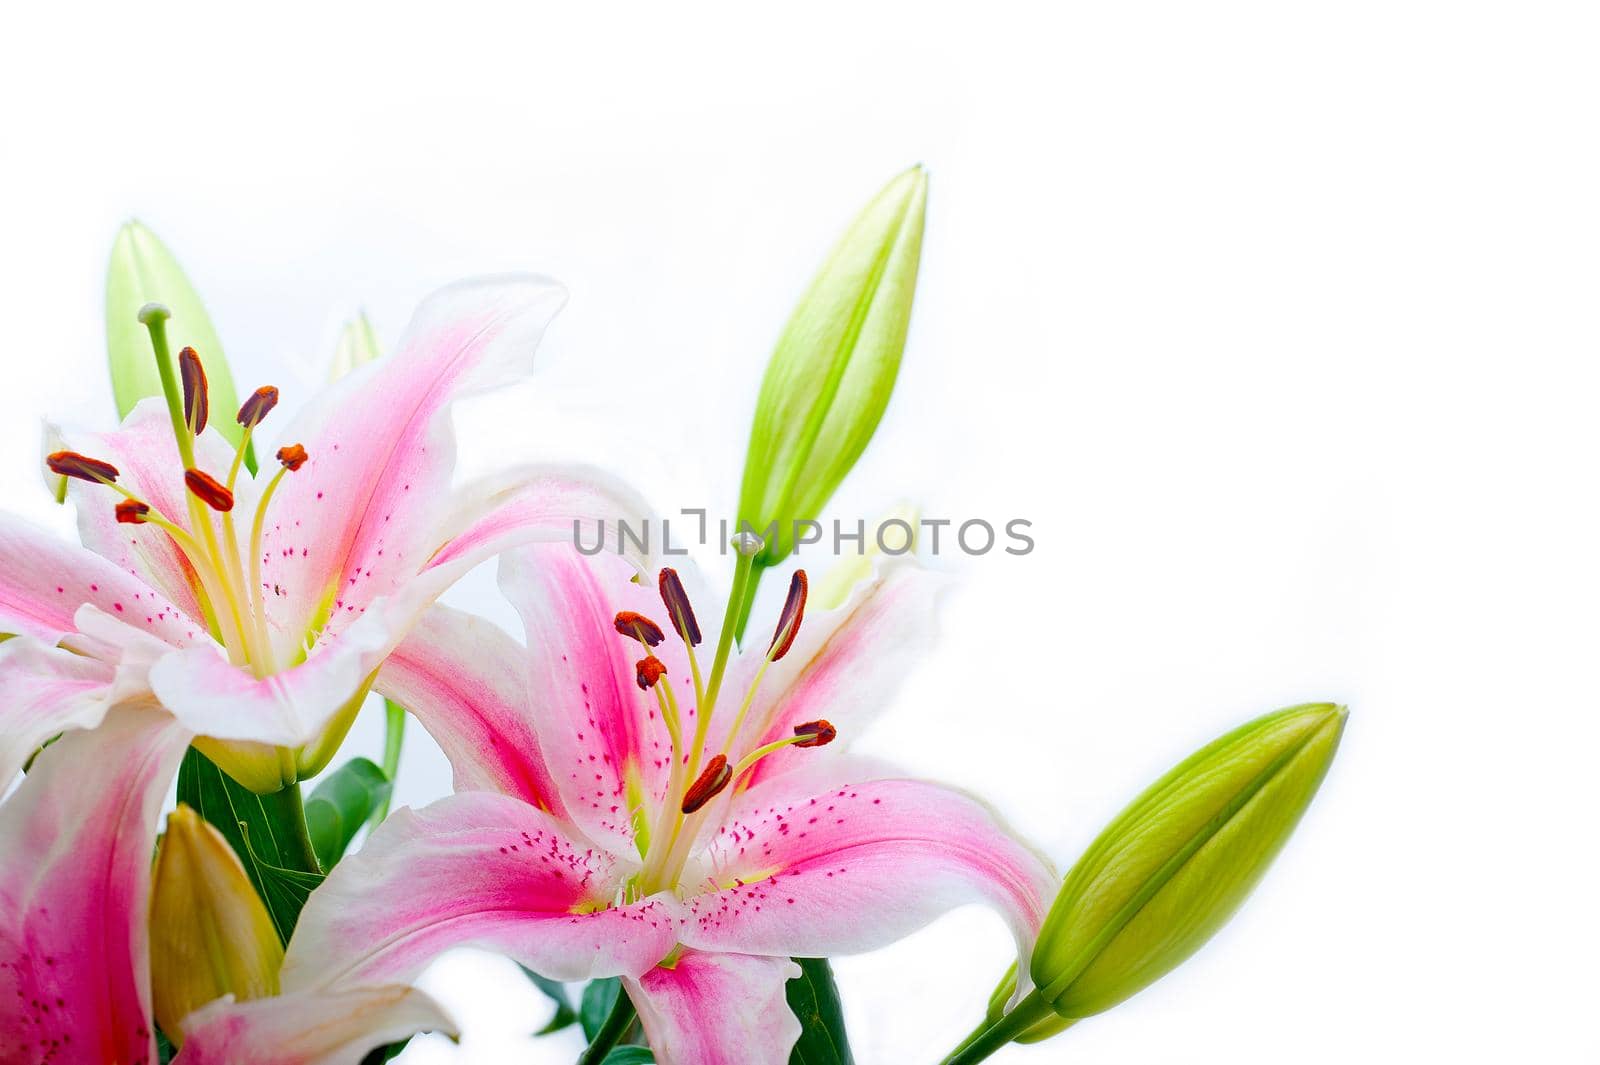 lily flowers corner frame by keko64